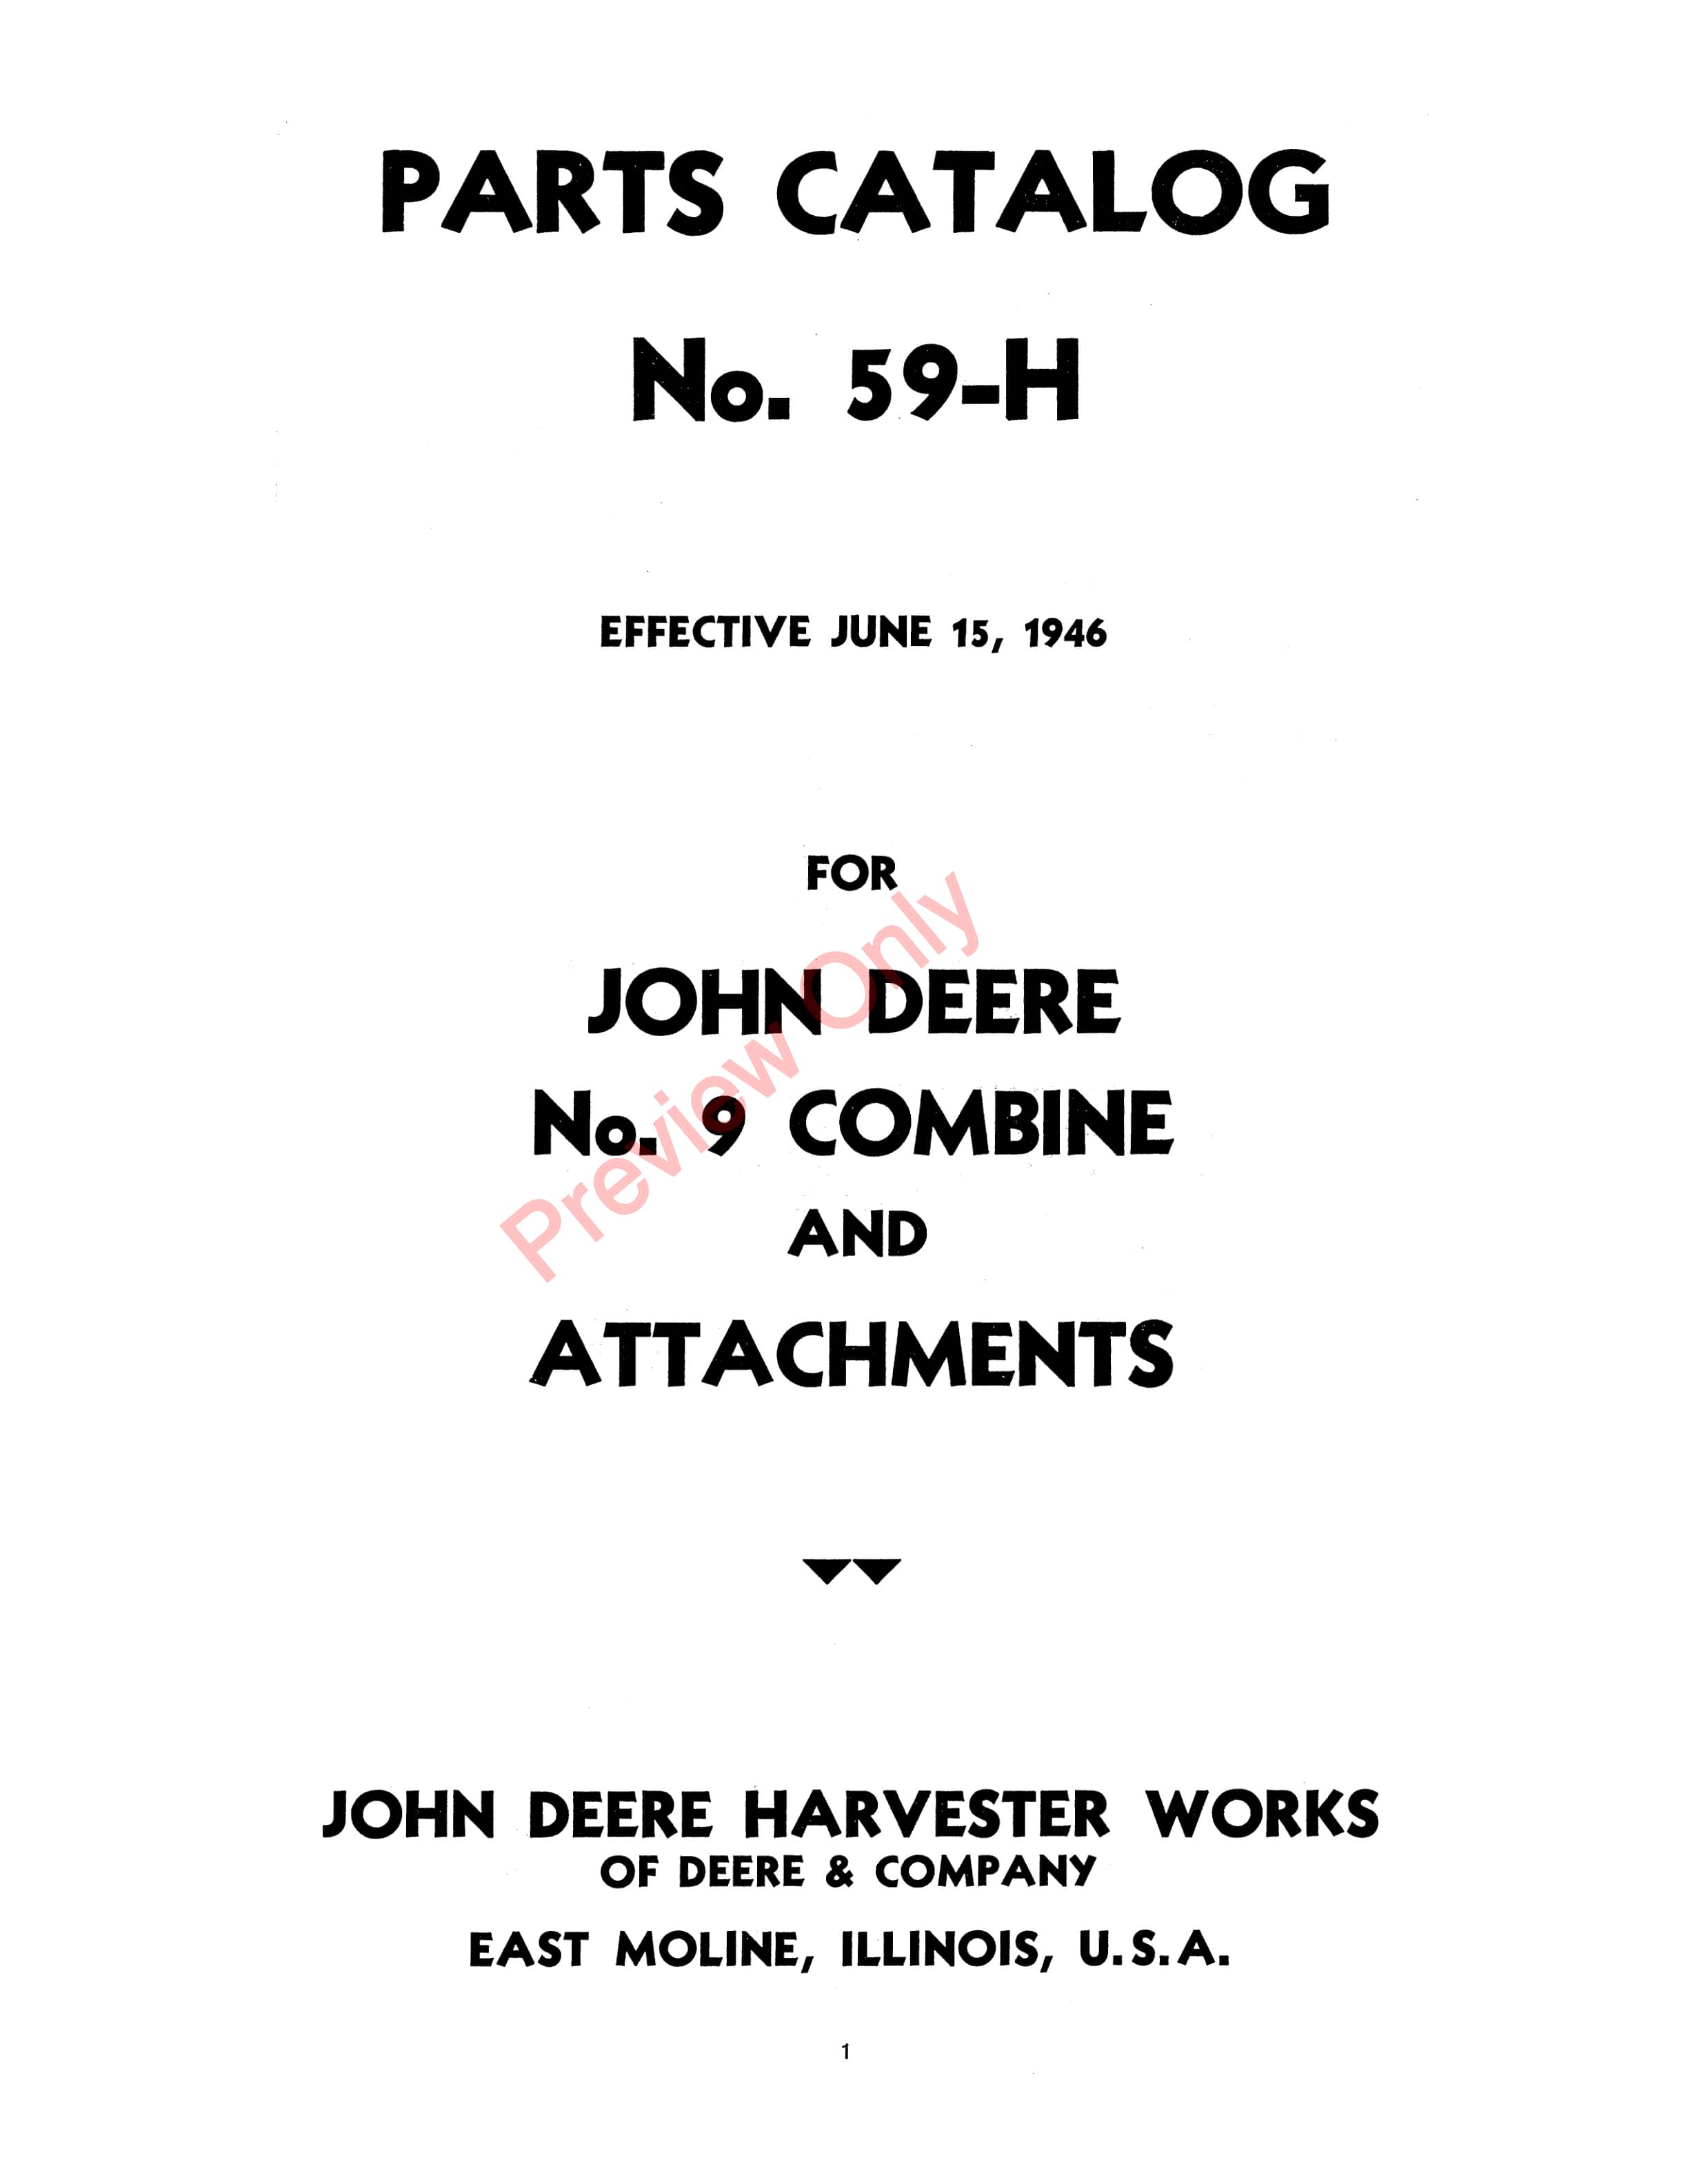 John Deere 9 Combine Parts Catalog CAT59H 15JUN46 5